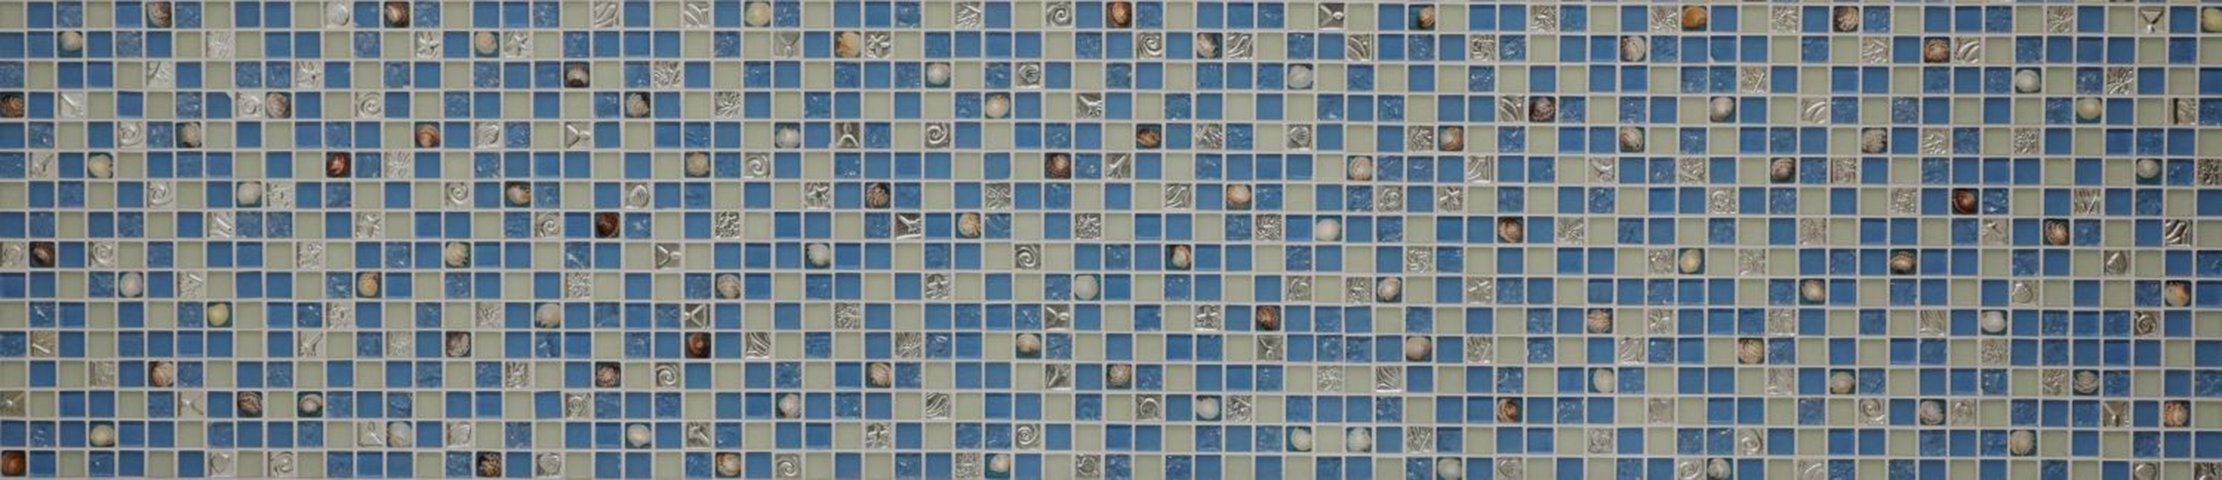 Mosani Mosaikfliesen Crystal Glasmosaik Mosaikfliesen Matten 10 glänzend / blau